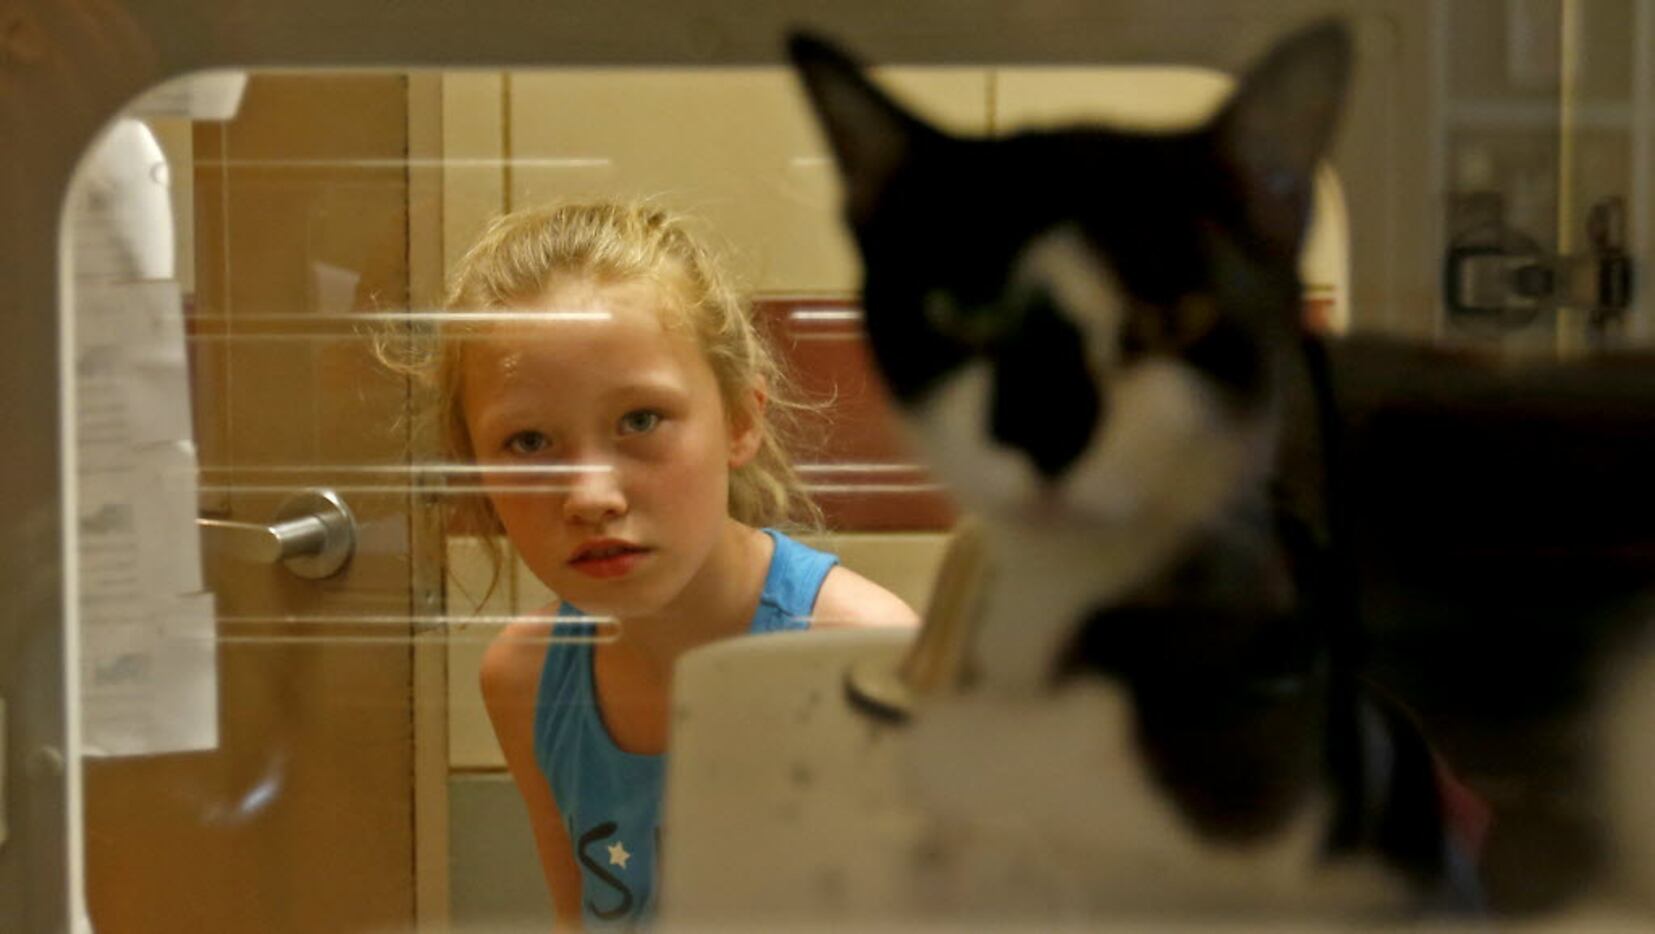 Jayden Robinson, 7, takes a look at a cat awaiting adoption at the shelter.